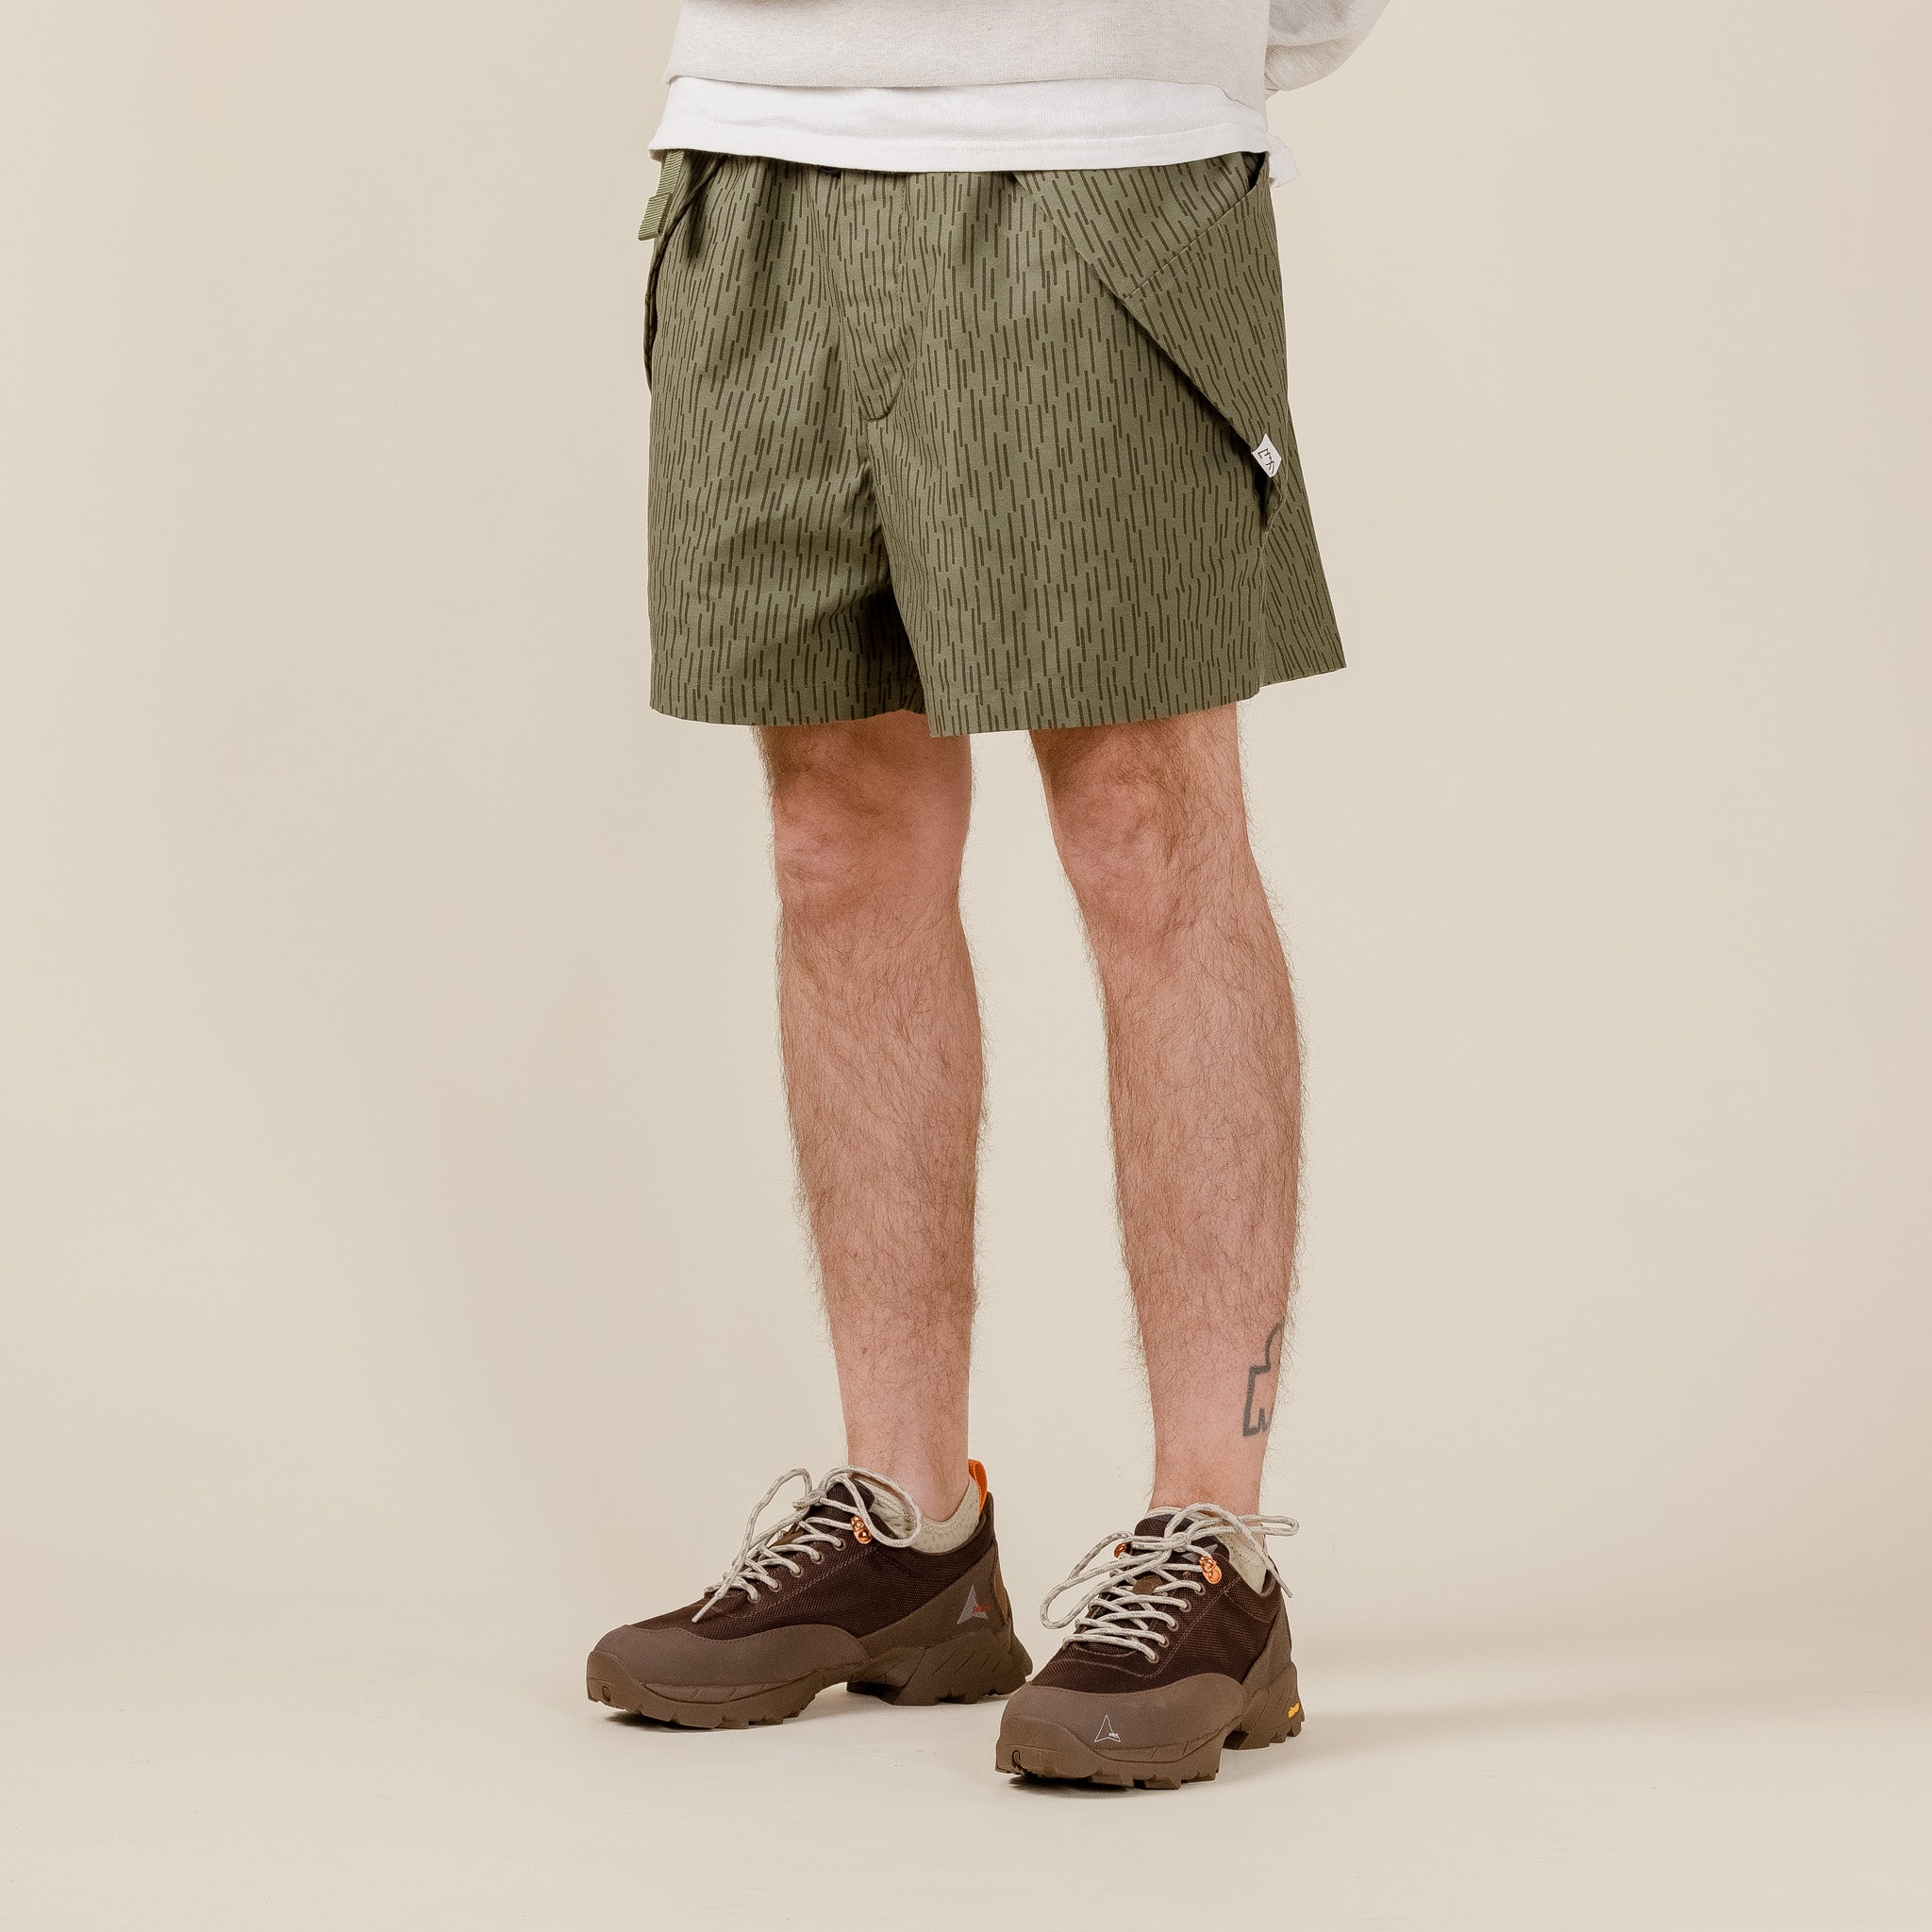 CMF Comfy Outdoor Garment - M65 Shorts Rain Camo - Khaki UK Stockist "lost hills store Japan"